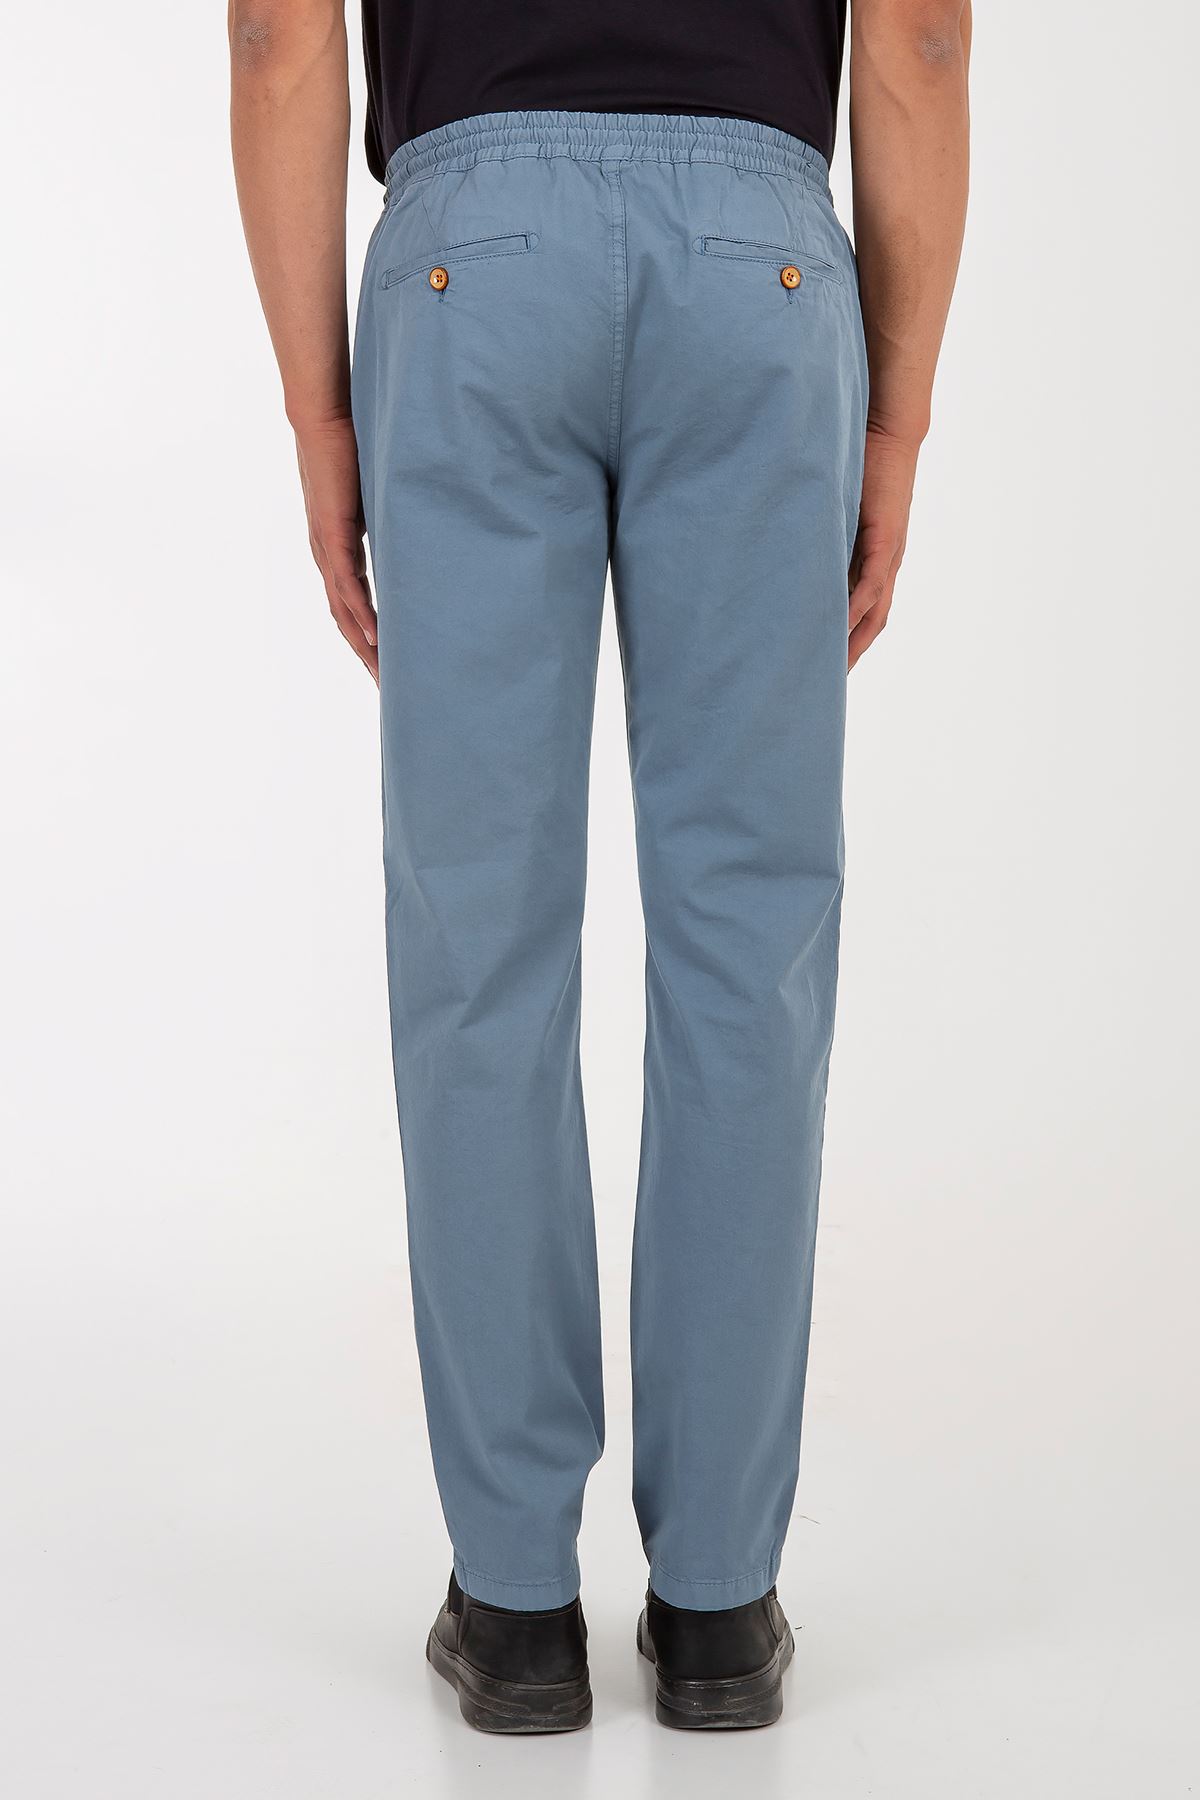 Fitz Roy Erkek Mavi Beli Lastikli İp Bağlamalı Modern Fit Pantolon Mirror